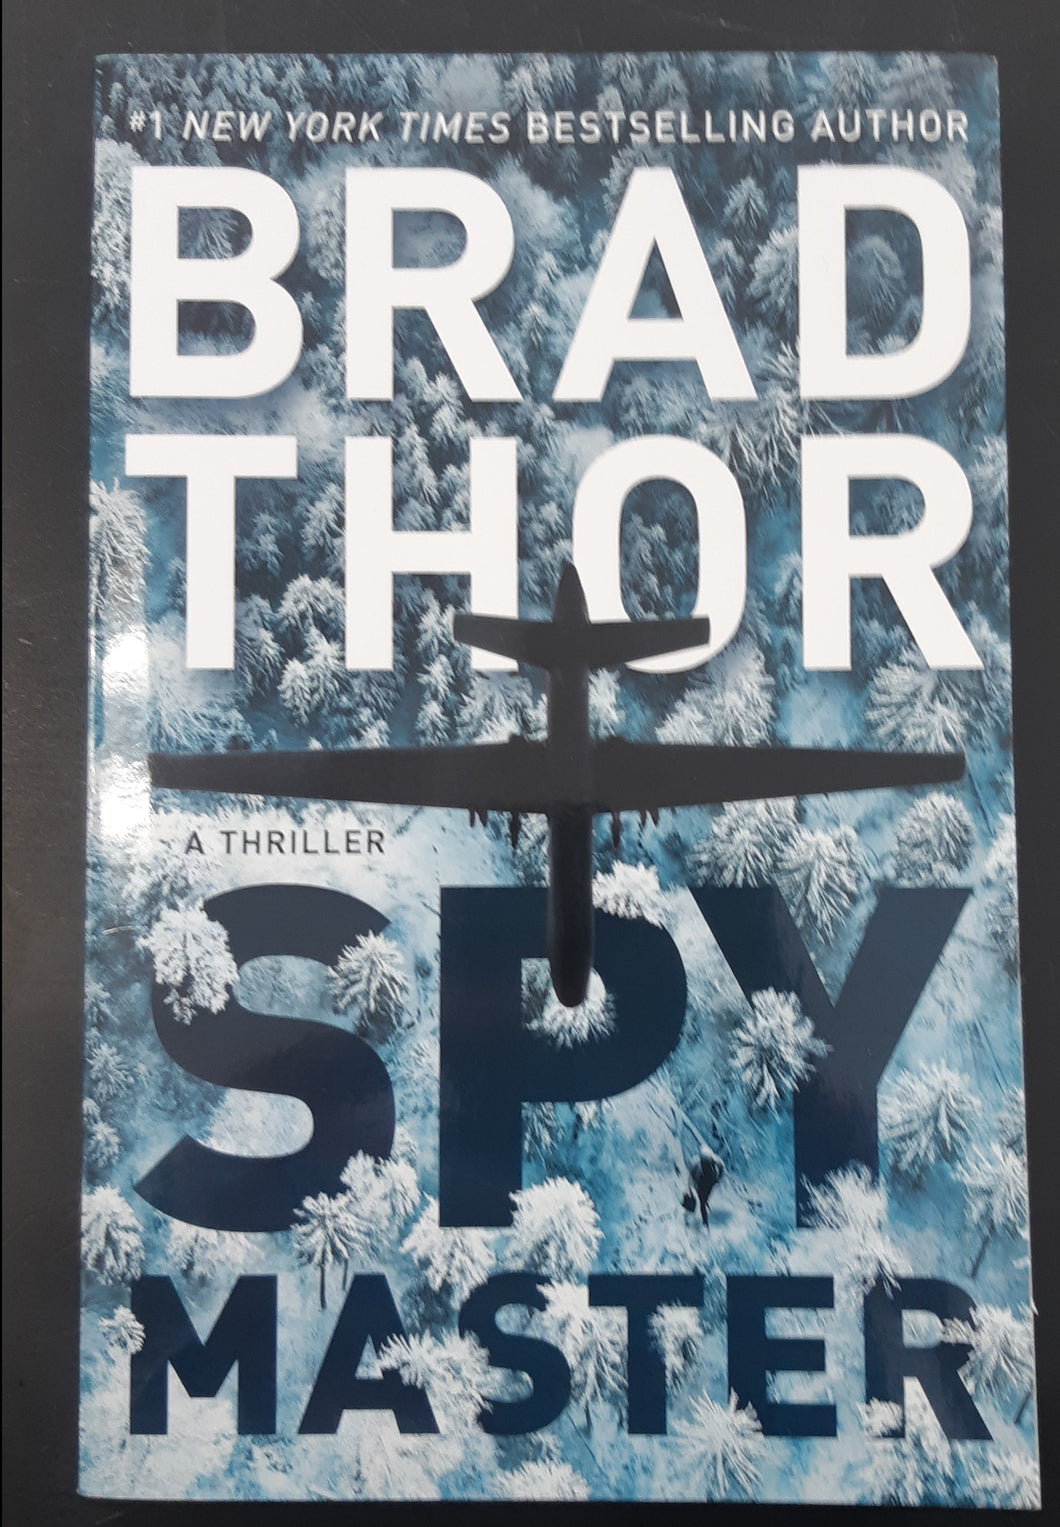 Spy Master: A Thriller by Brad Thor